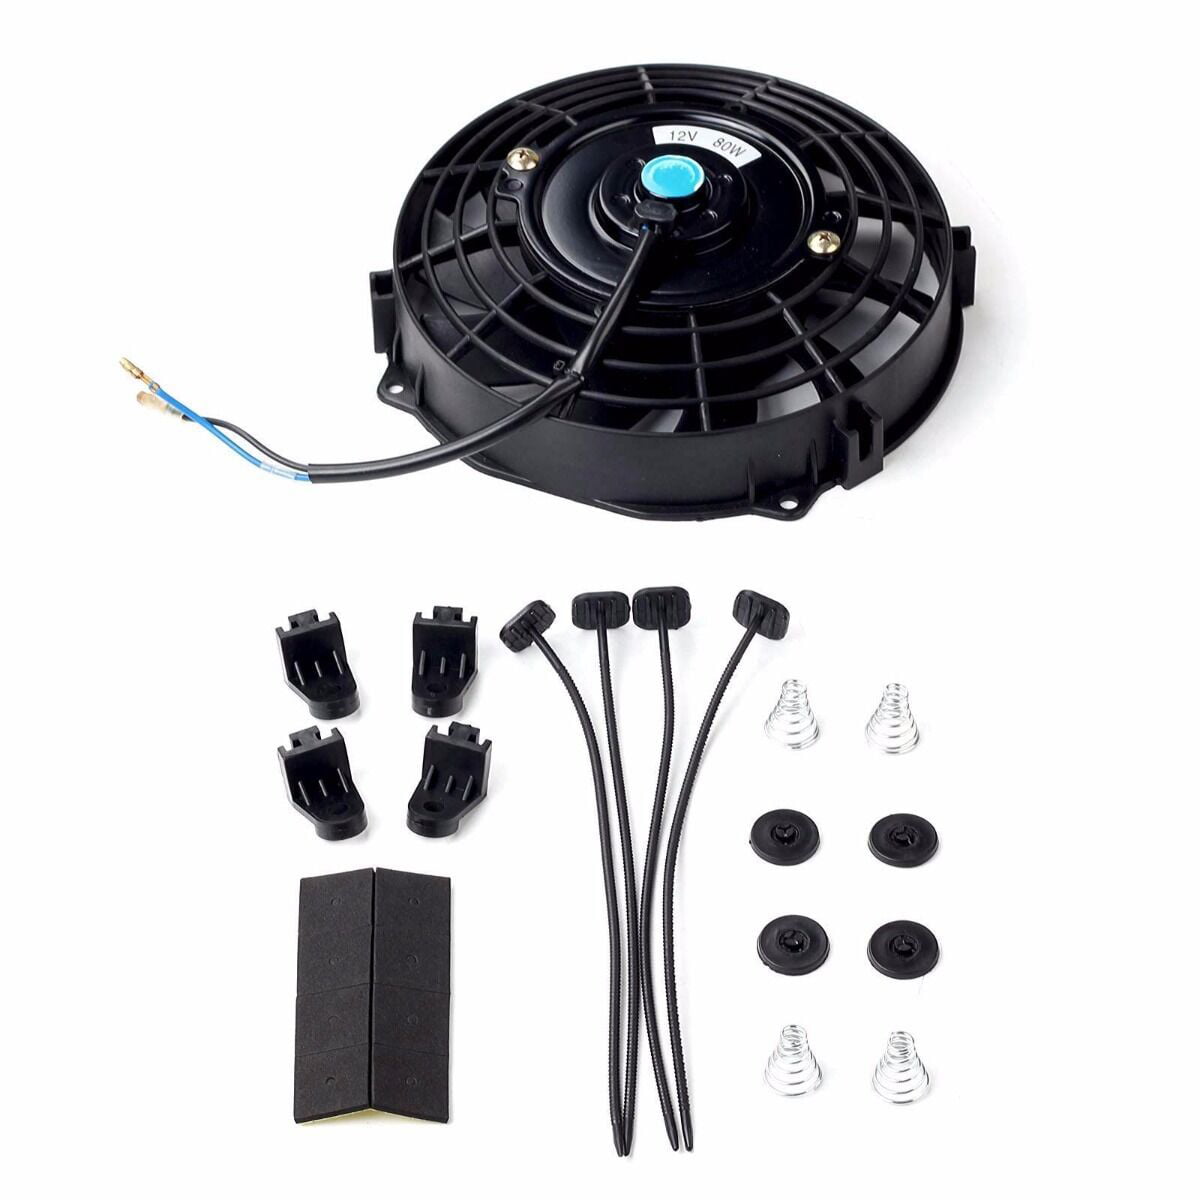 Mounting Kit Black, 7 Inch AJP Distributors Universal High Performance 12V Electric Slim Radiator Push Pull Cooling Fan 